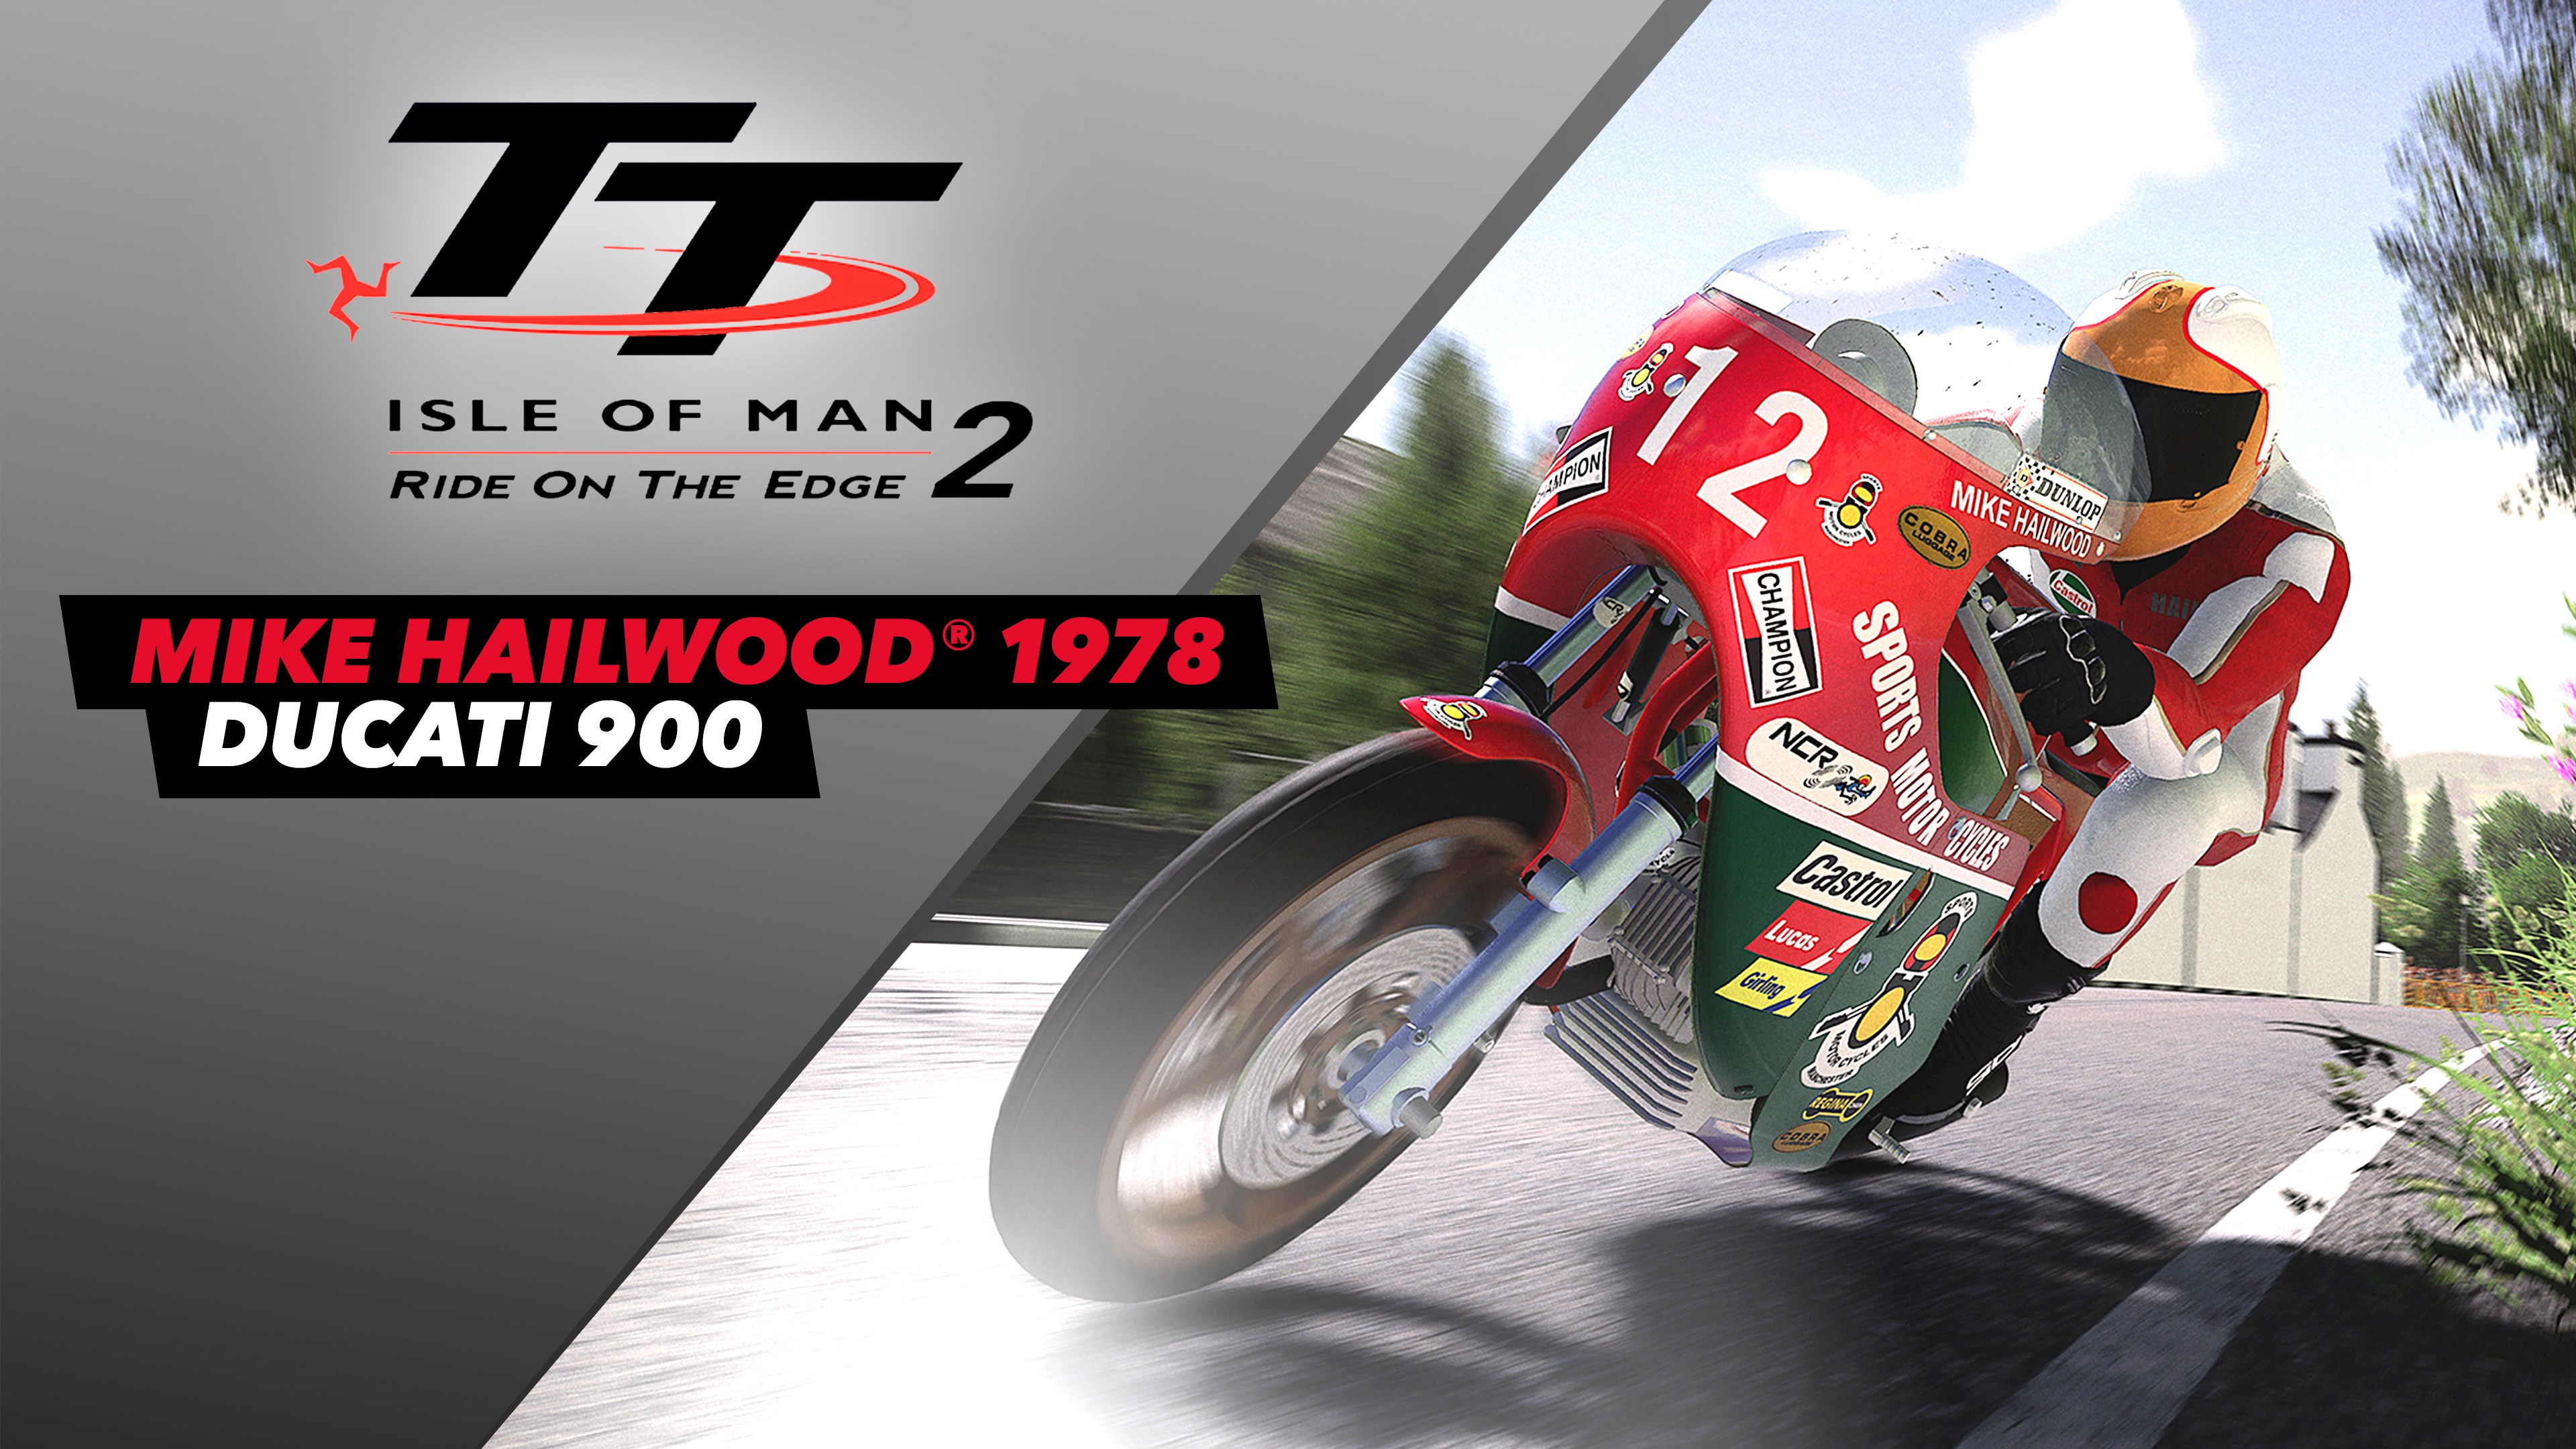 Tt Isle Of Man 2 Ducati 900 Mike Hailwood 1978 を購入 Microsoft Store Ja Jp